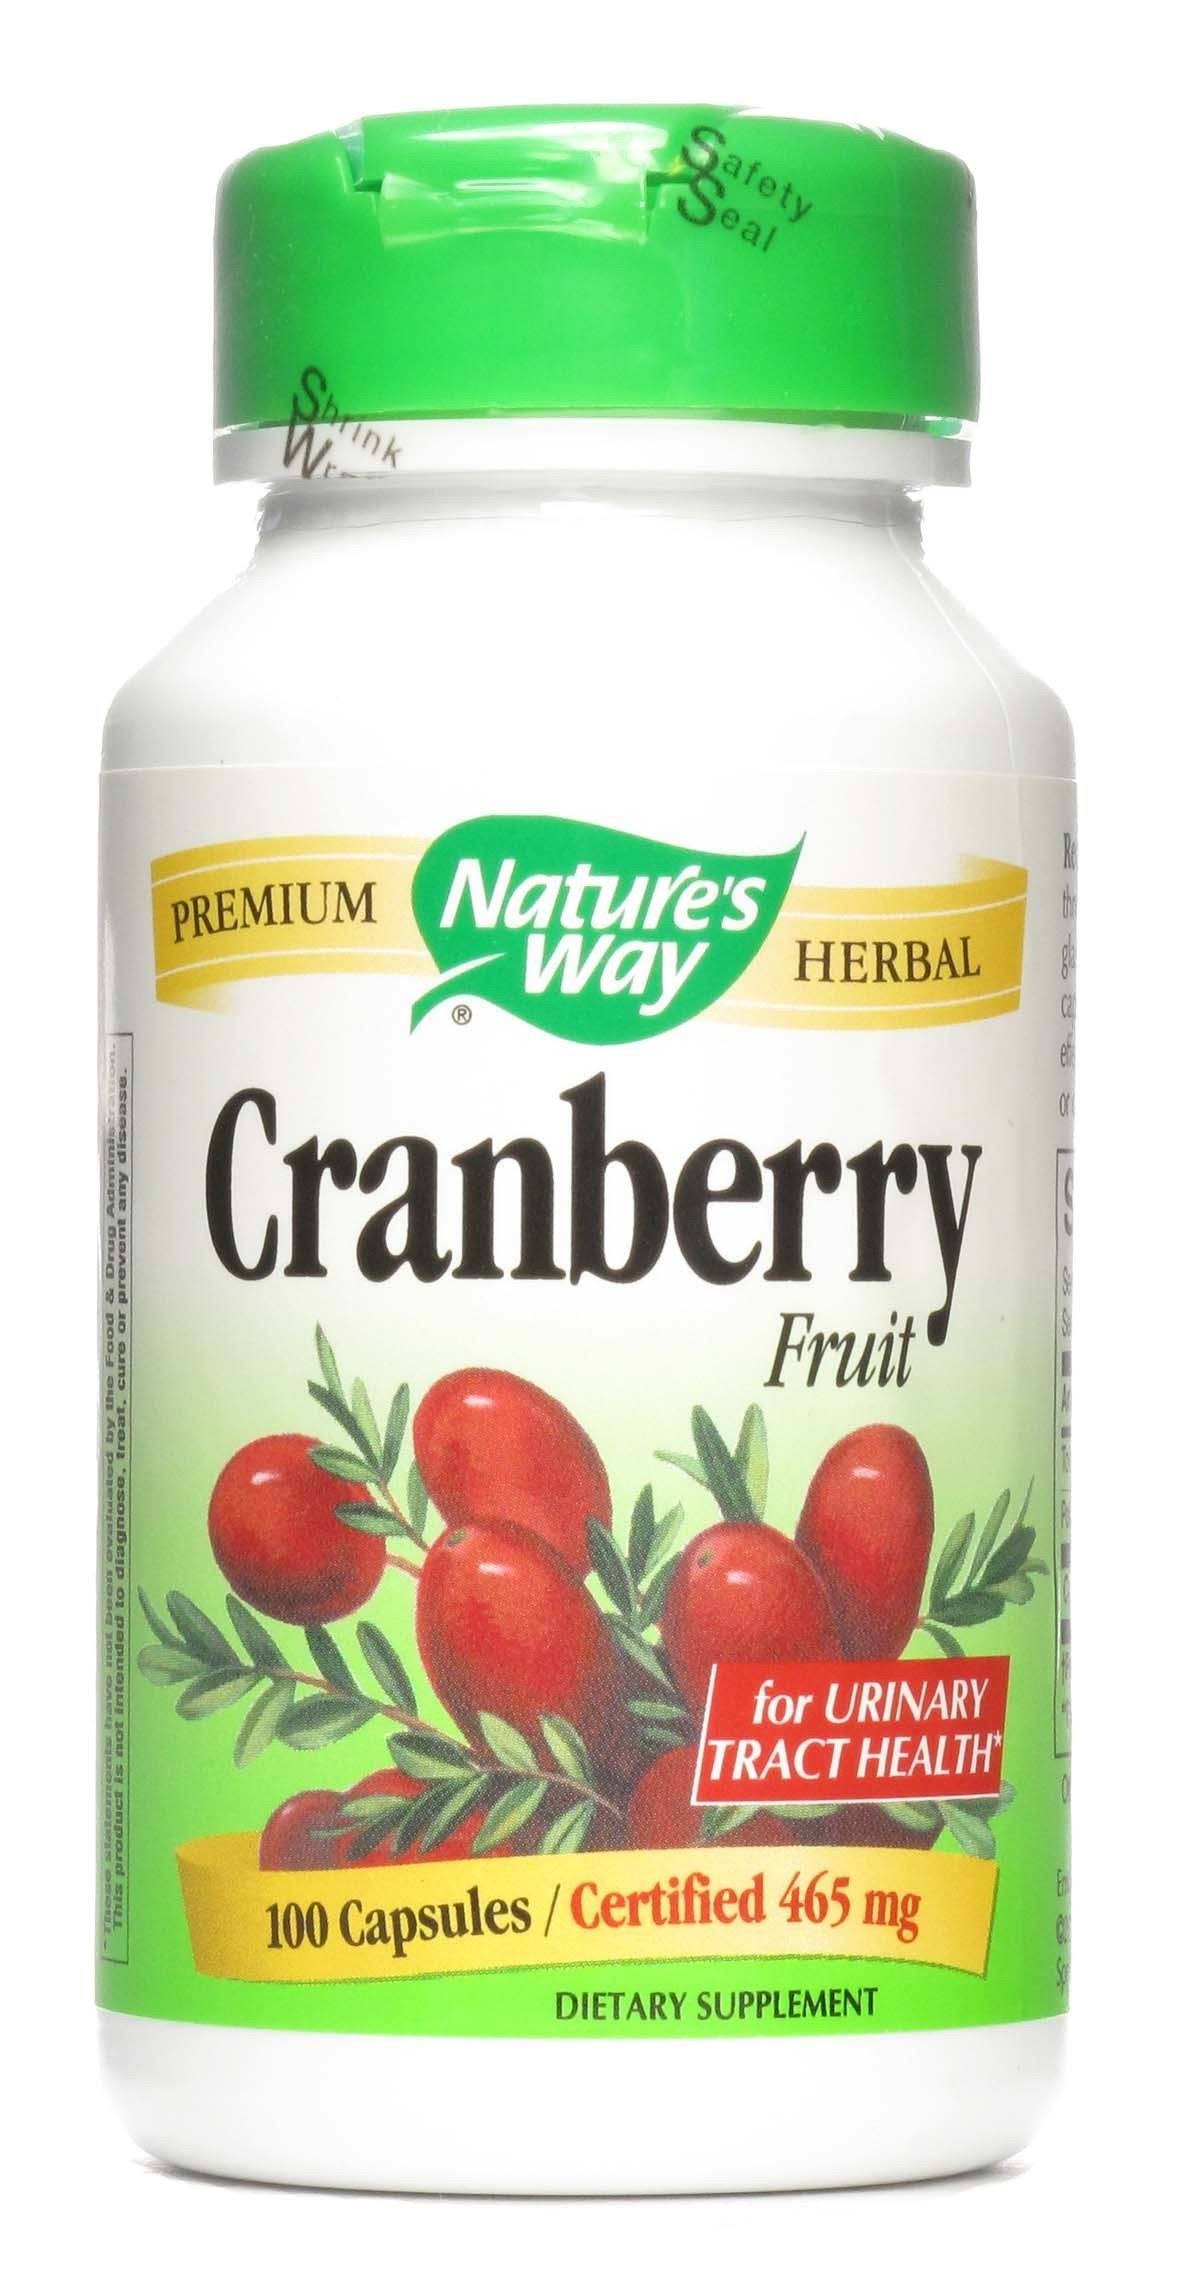 Nature's Way Cranberry Fruit - 465mg, 100 Capsules